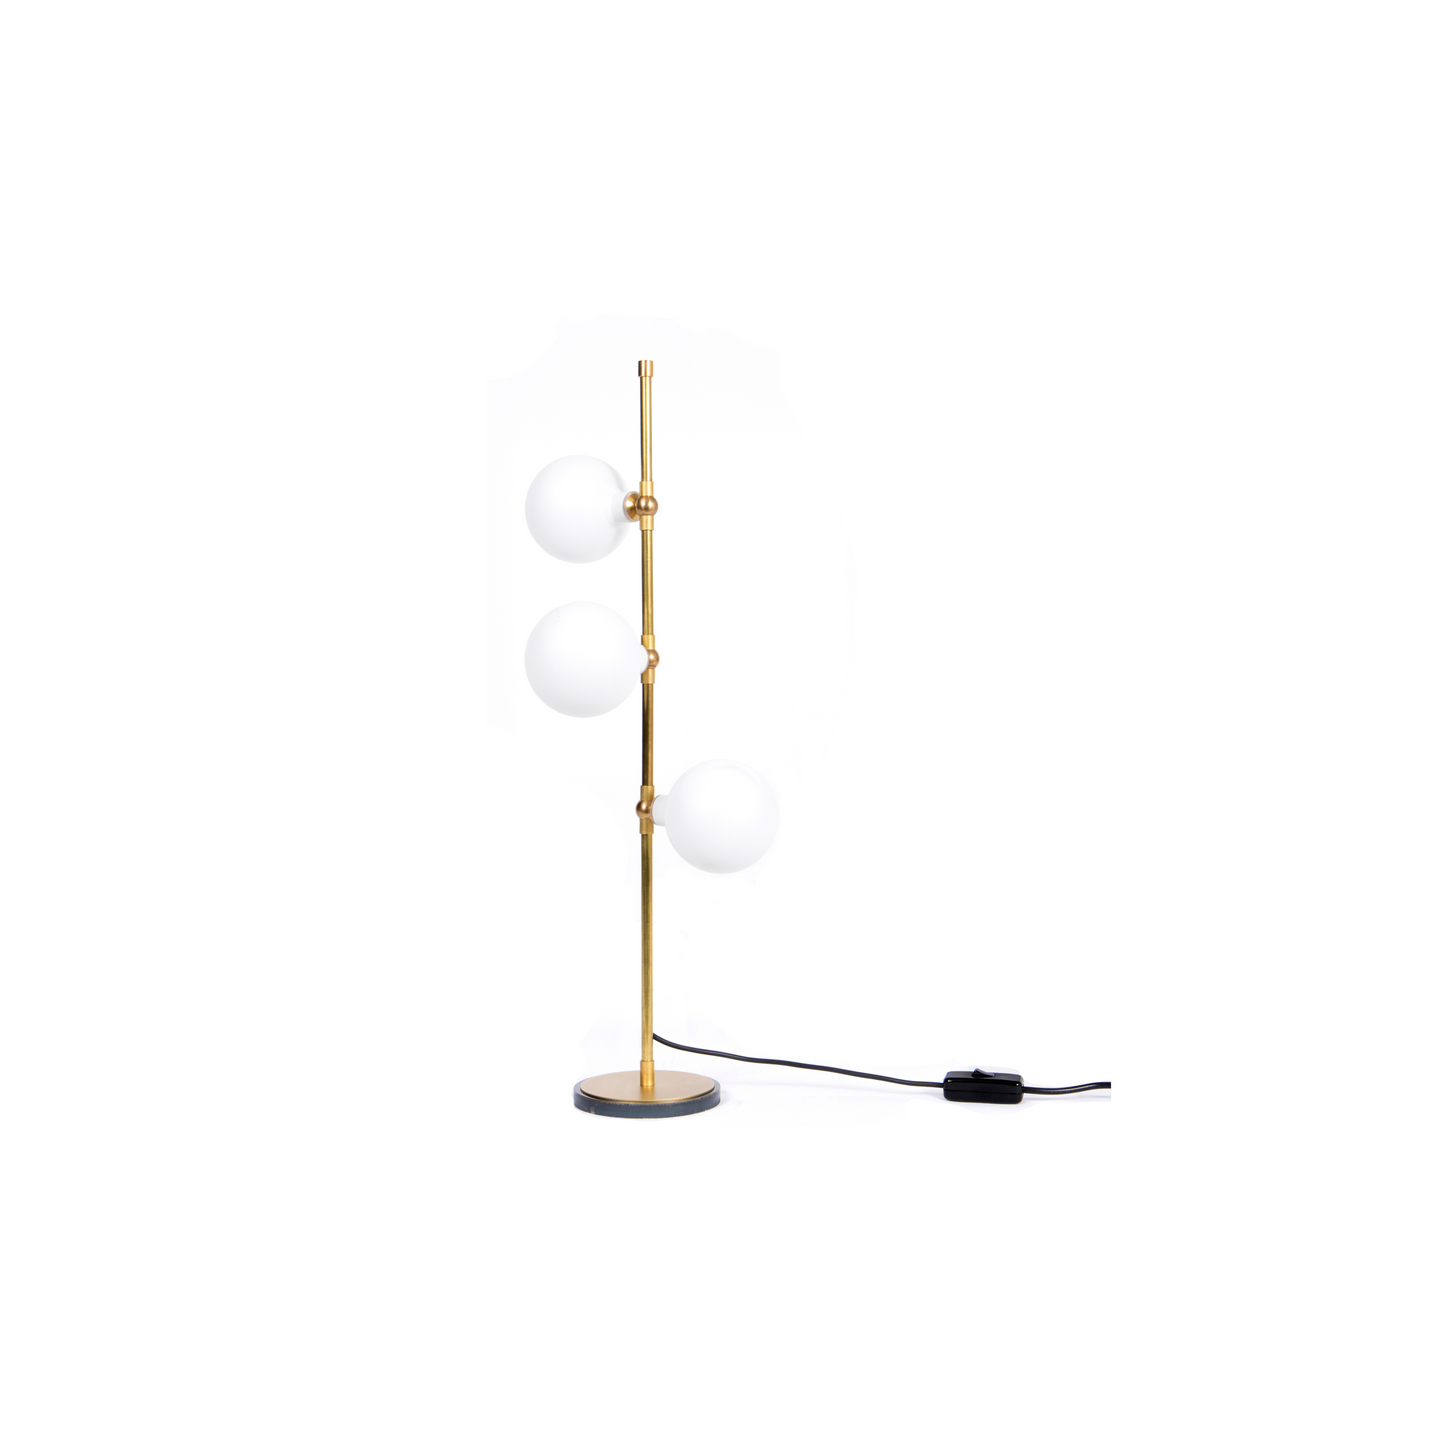 Grappolo Table Lamp